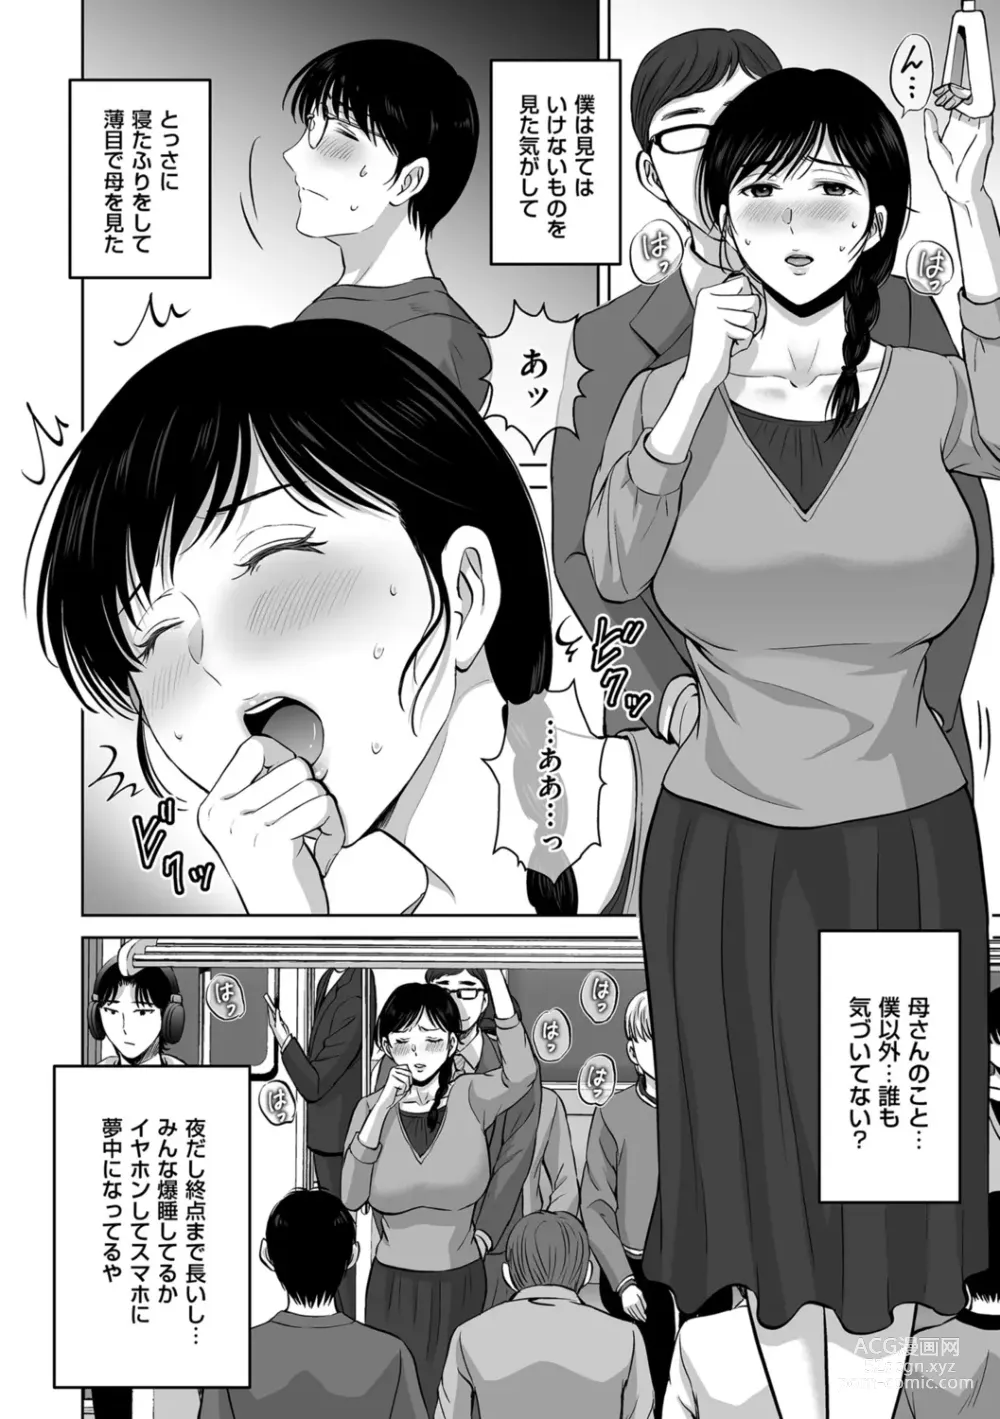 Page 6 of manga Mesuzakari no Haha-tachi e